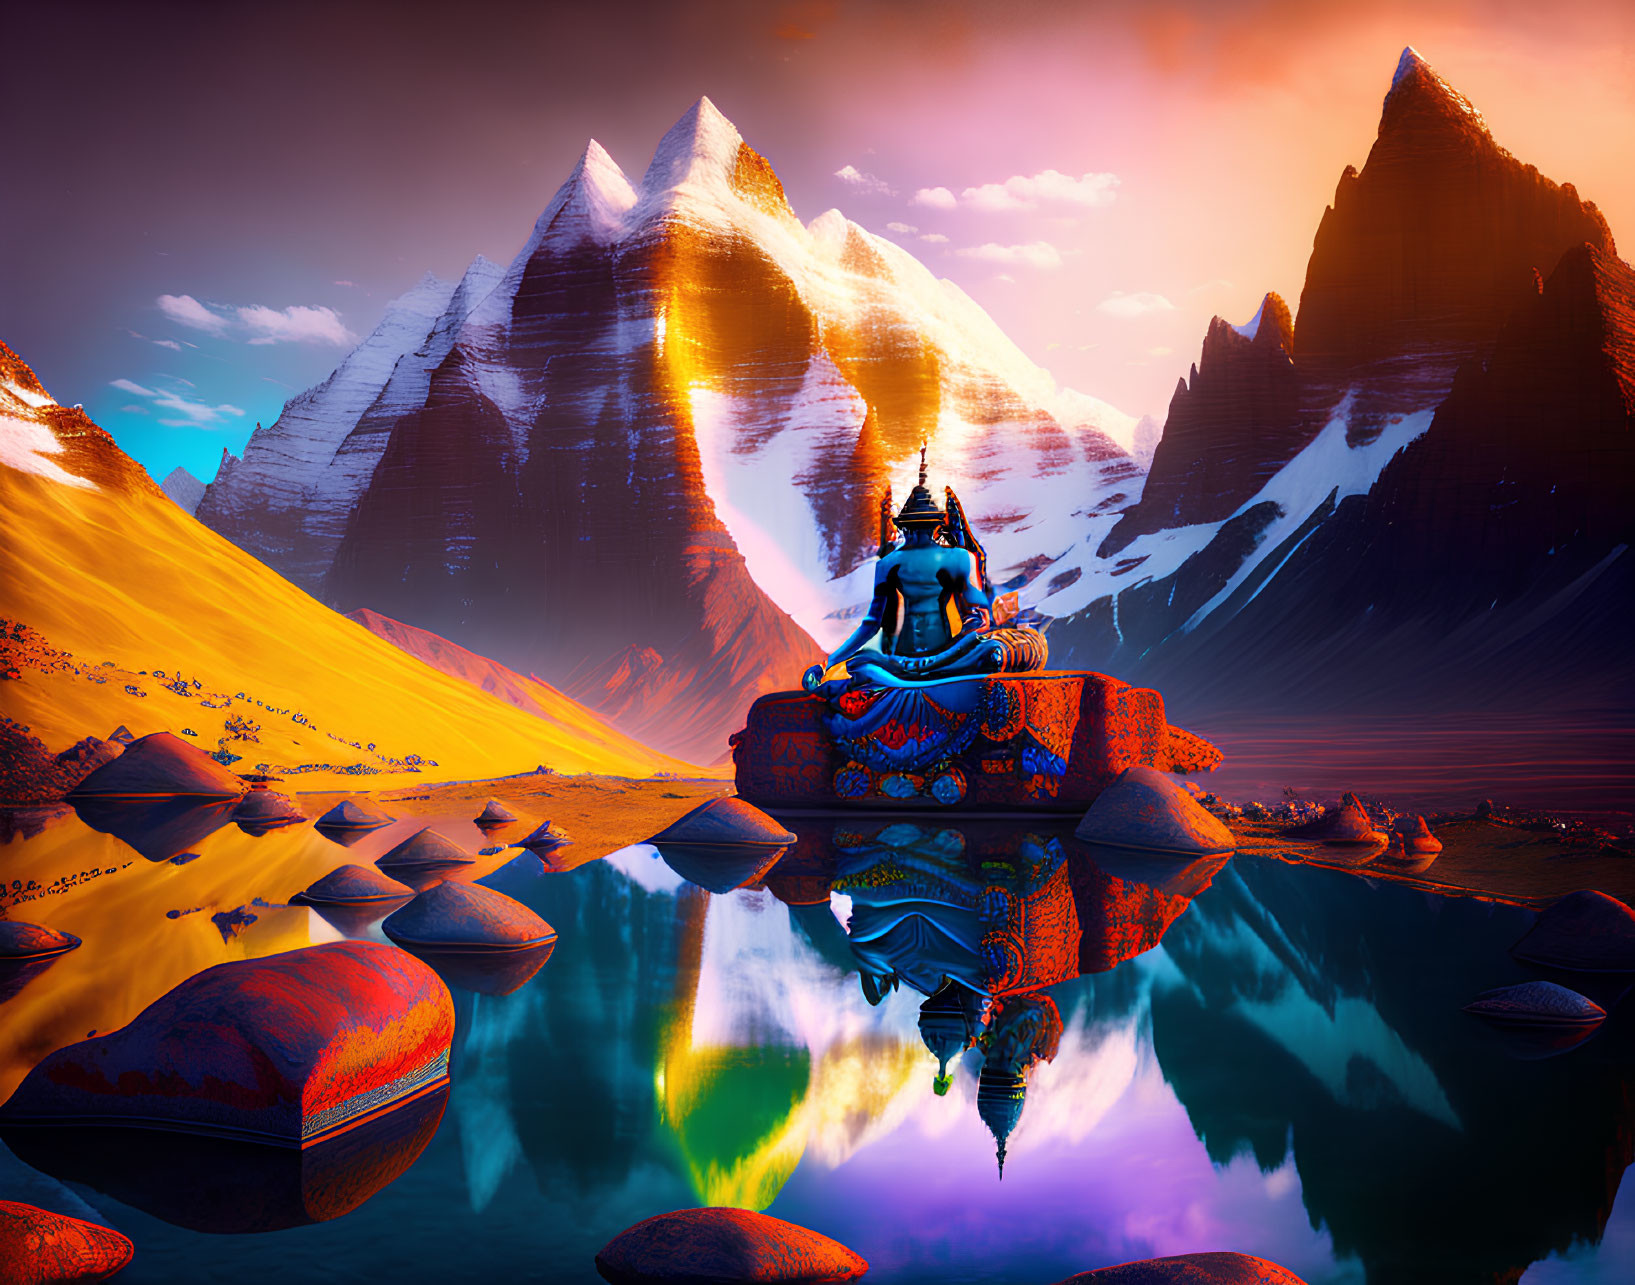 Surreal landscape with meditating figure, reflective lake, vibrant sunset, mountains, rocks